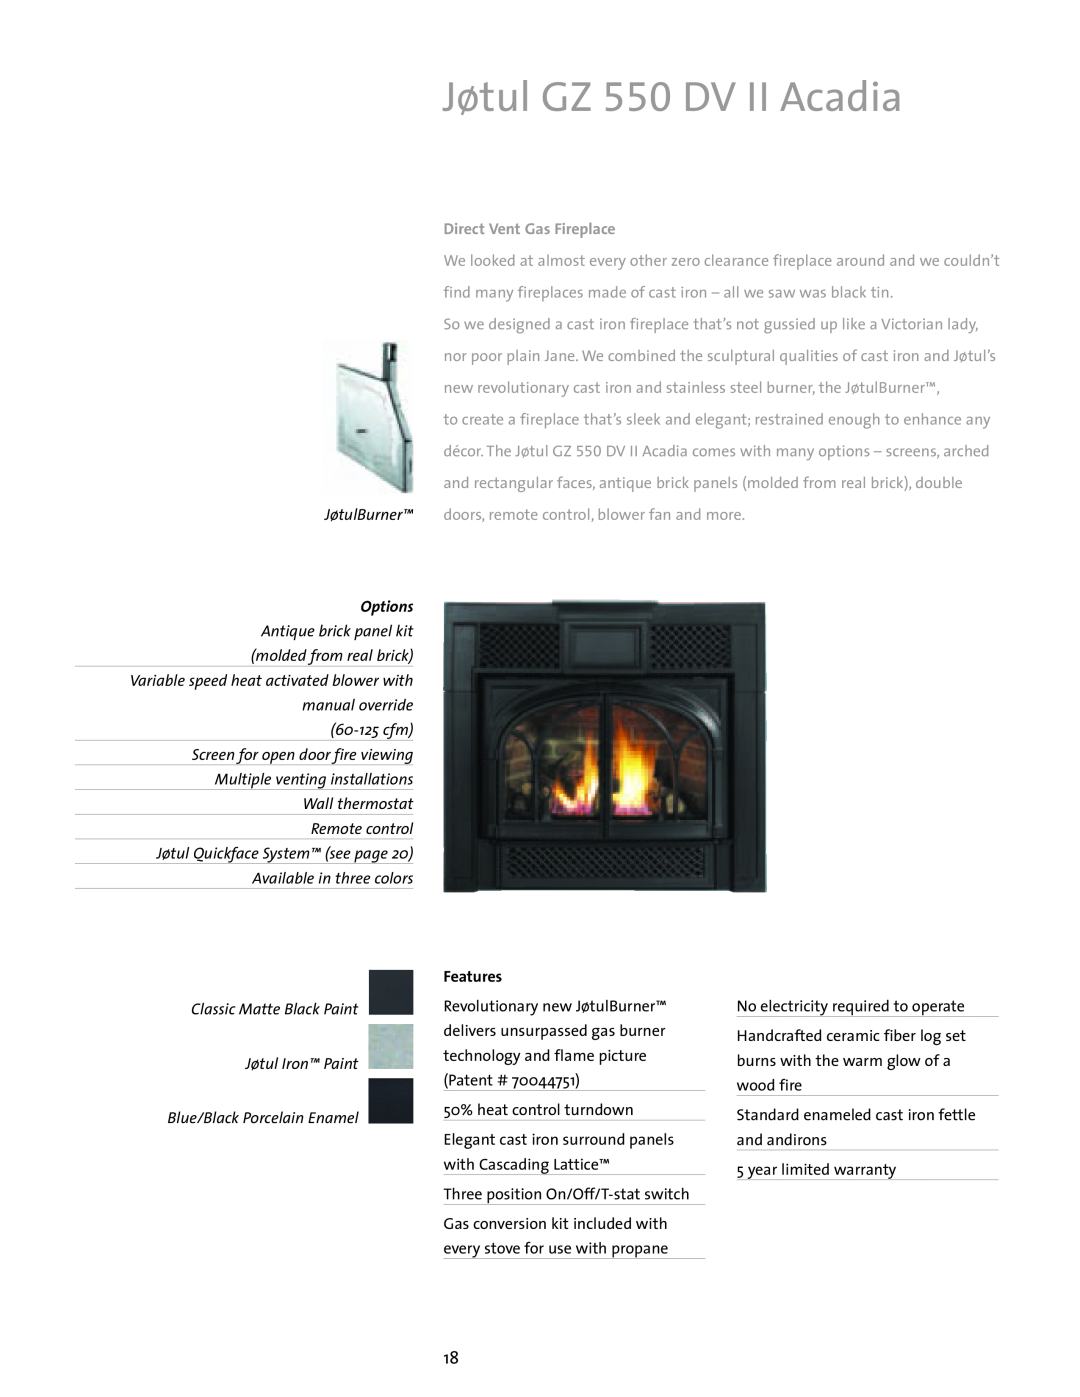 Jotul Gas Inserts and Fireplaces brochure Jøtul GZ 550 DV II Acadia, Direct Vent Gas Fireplace 